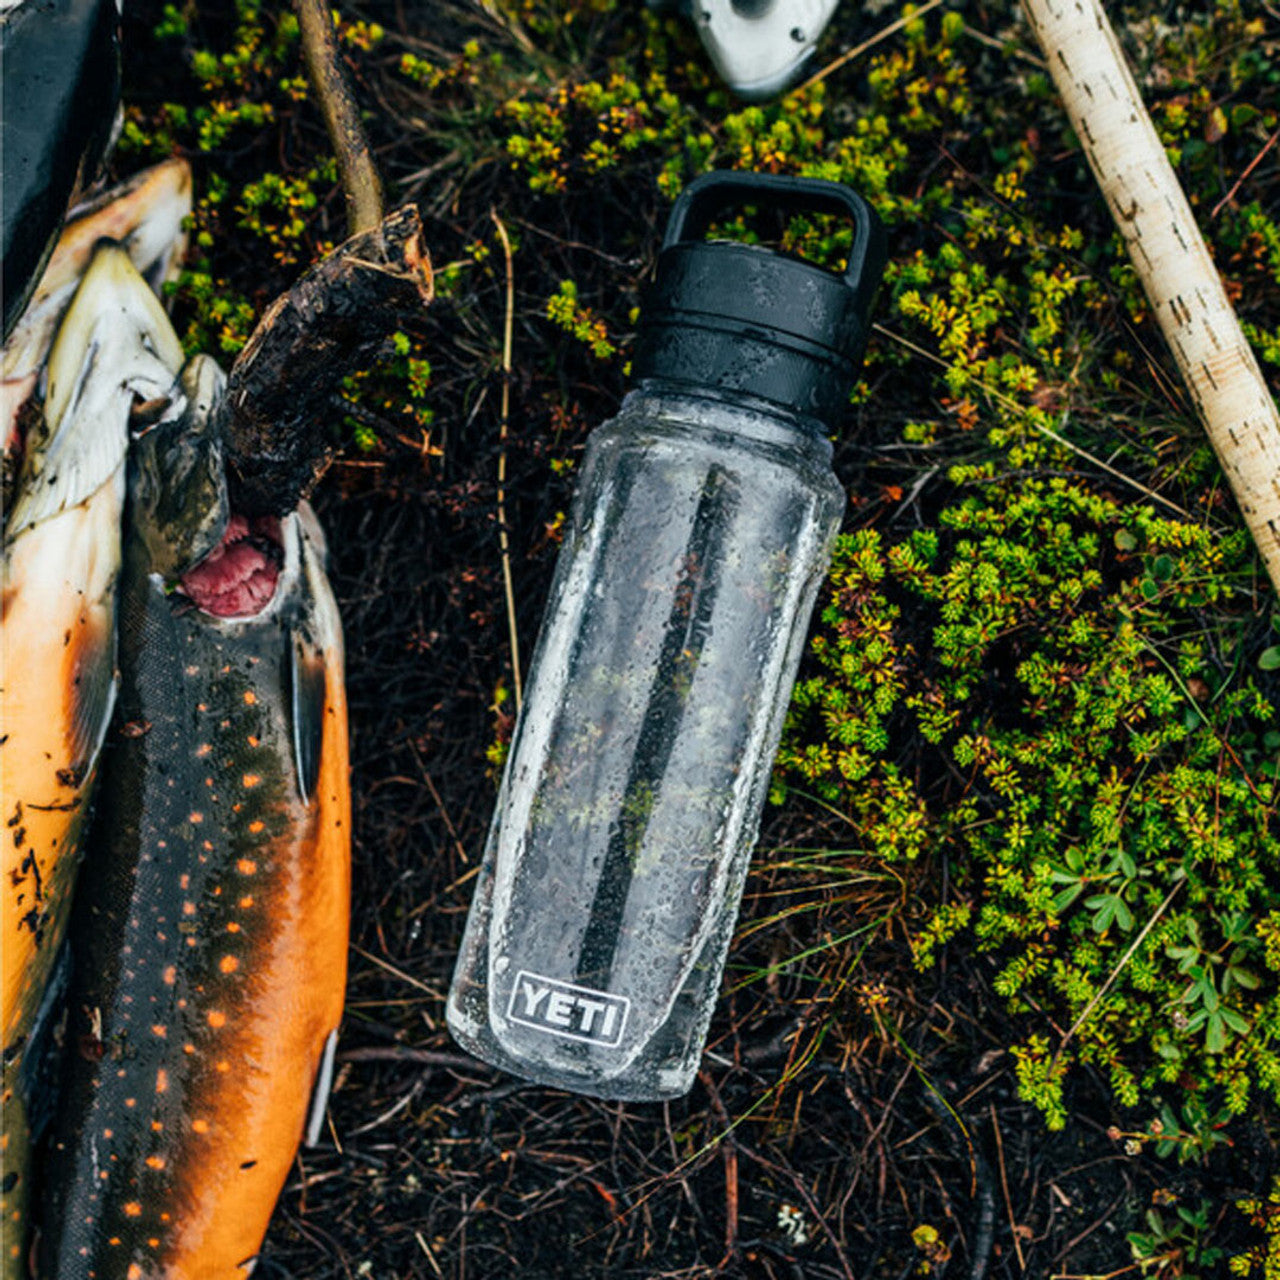 Yeti Yonder 25 oz. Water Bottle Seafoam